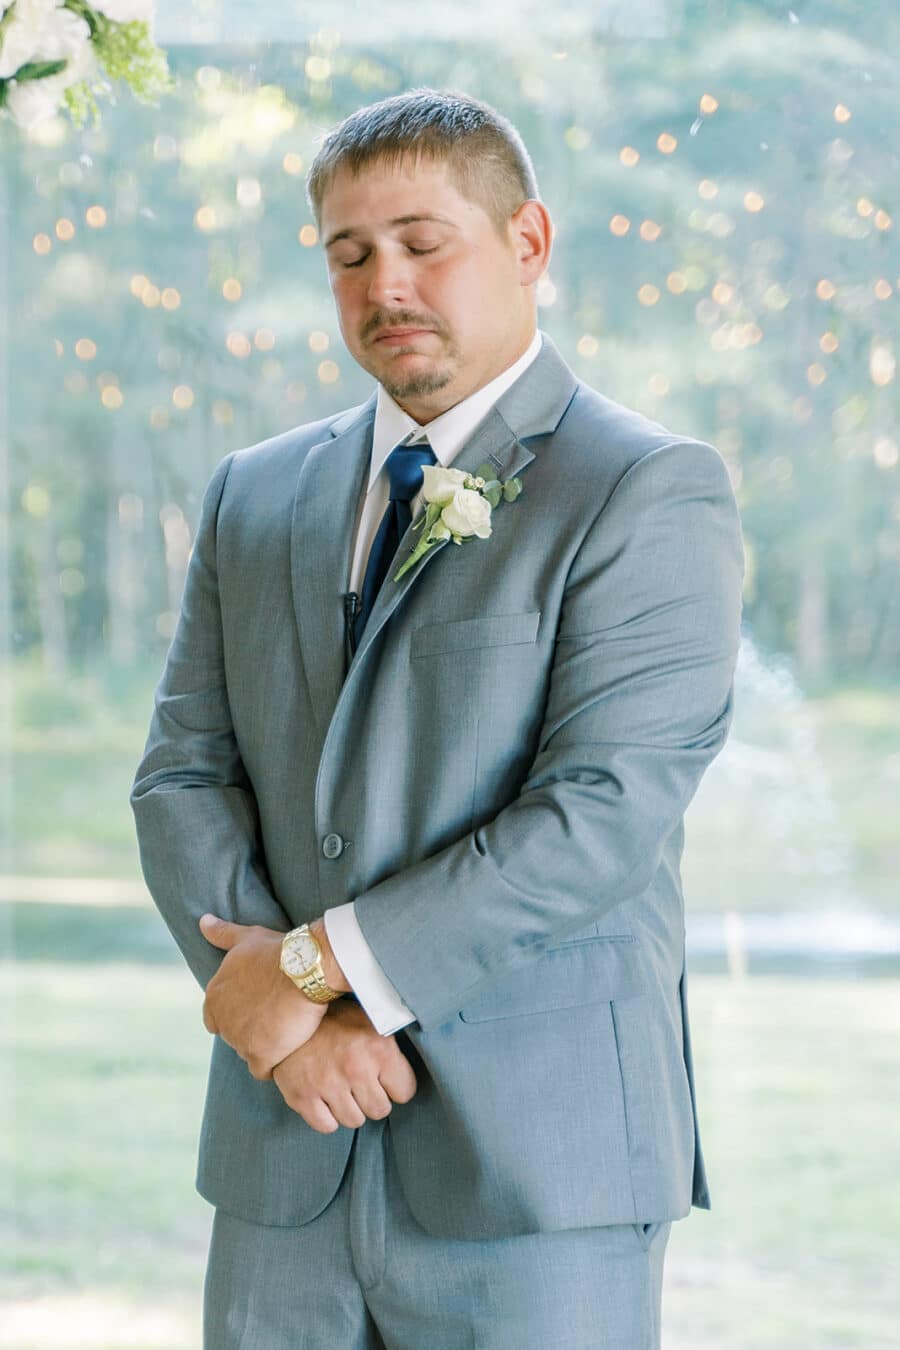 Groom's emotional reaction to bride walking down the aisle | Nashville Bride Guide